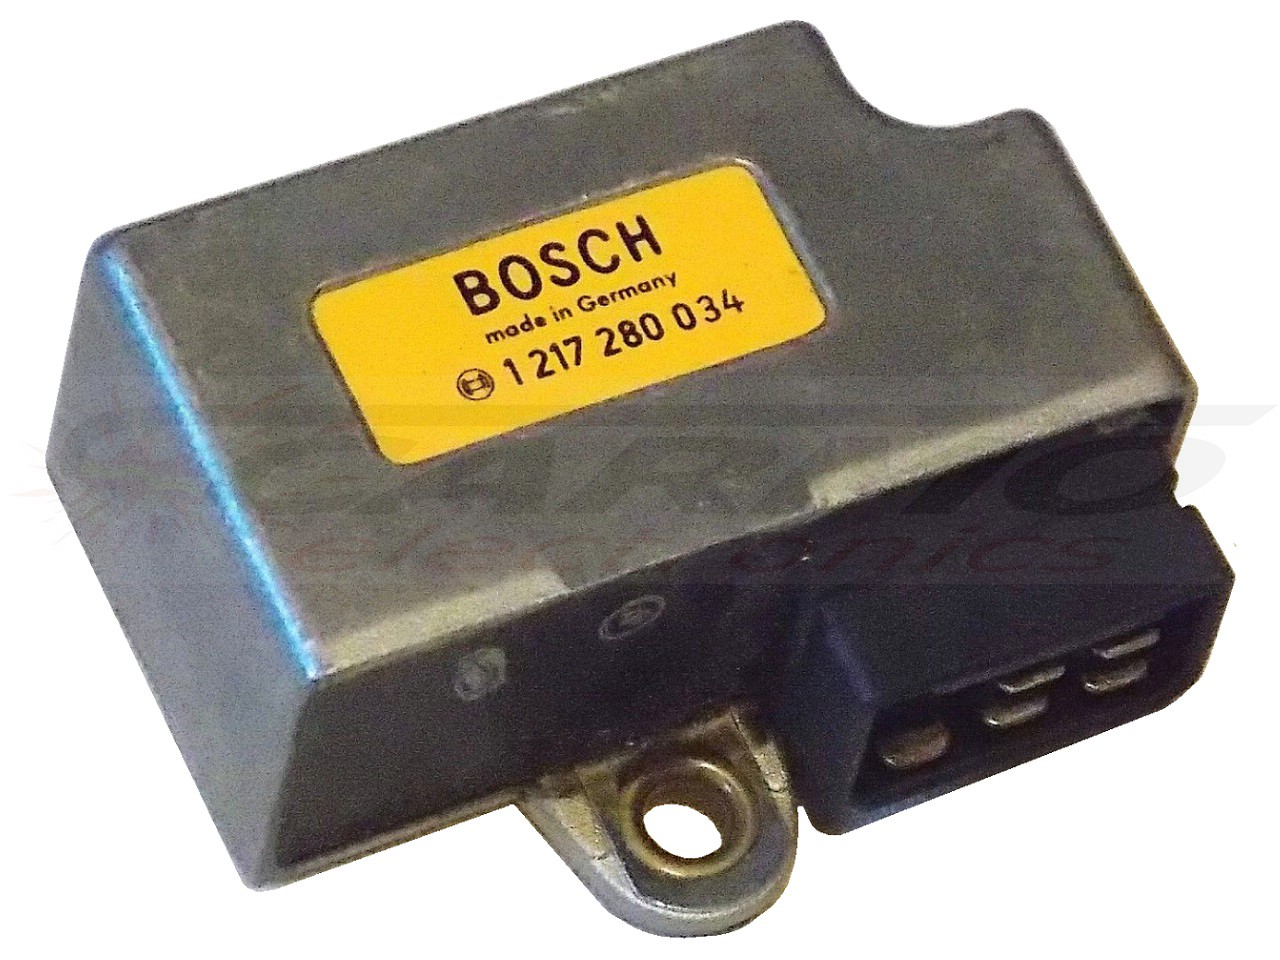 Laverda Jota 1000 igniter ignition module CDI TCI Box (Bosch, 1 217 280 034)